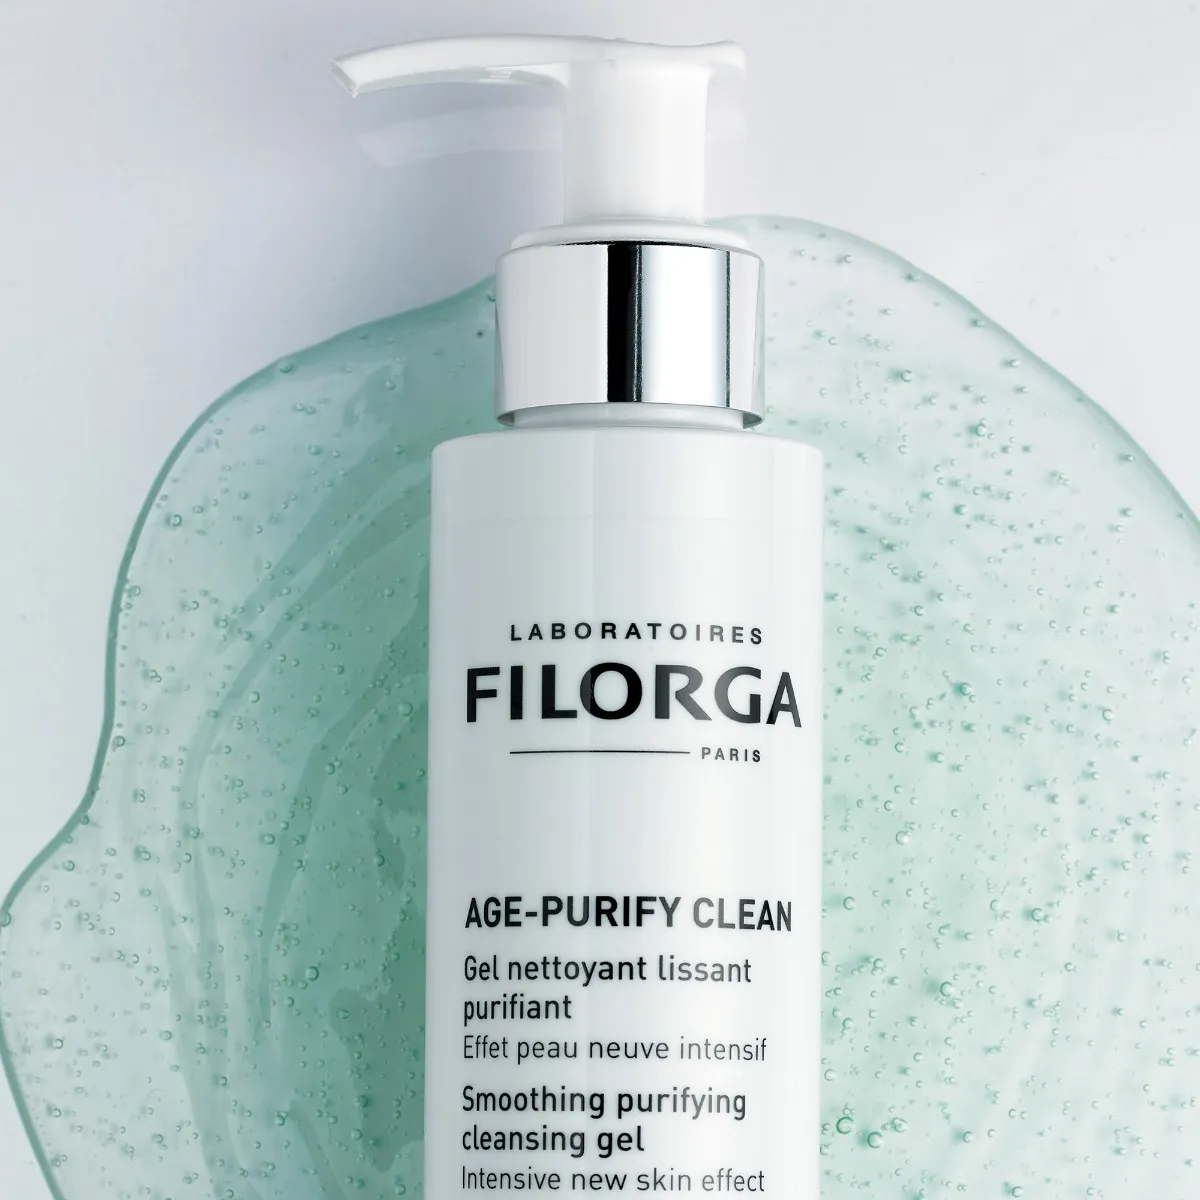 Filorga Age-Purify Clean 150 ml Gel Detergente Levigante Purificante